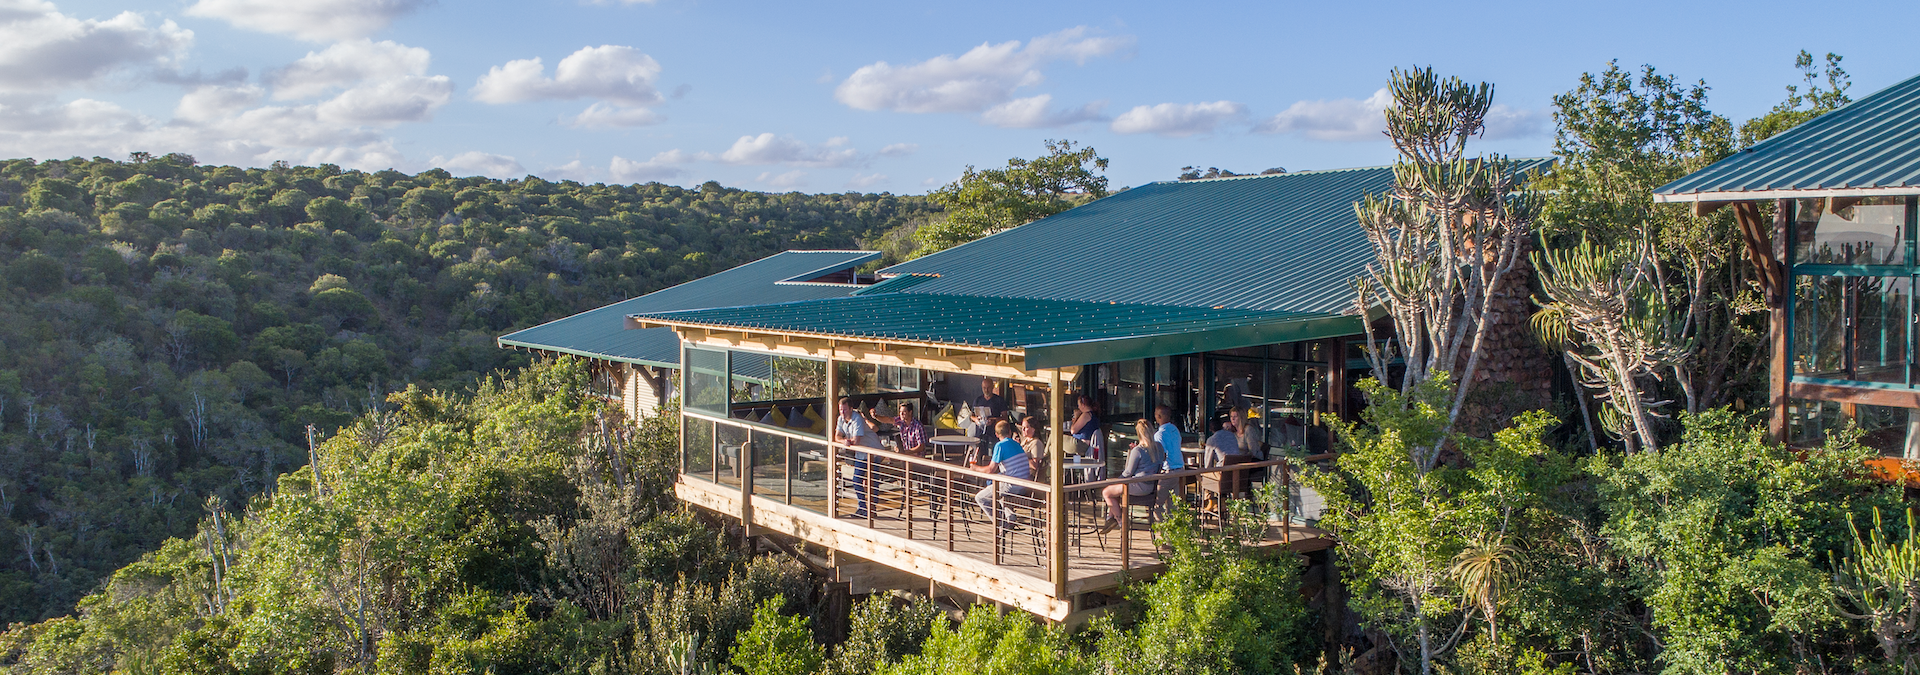 Main Lodge Malaria-Free South African Safari Experience